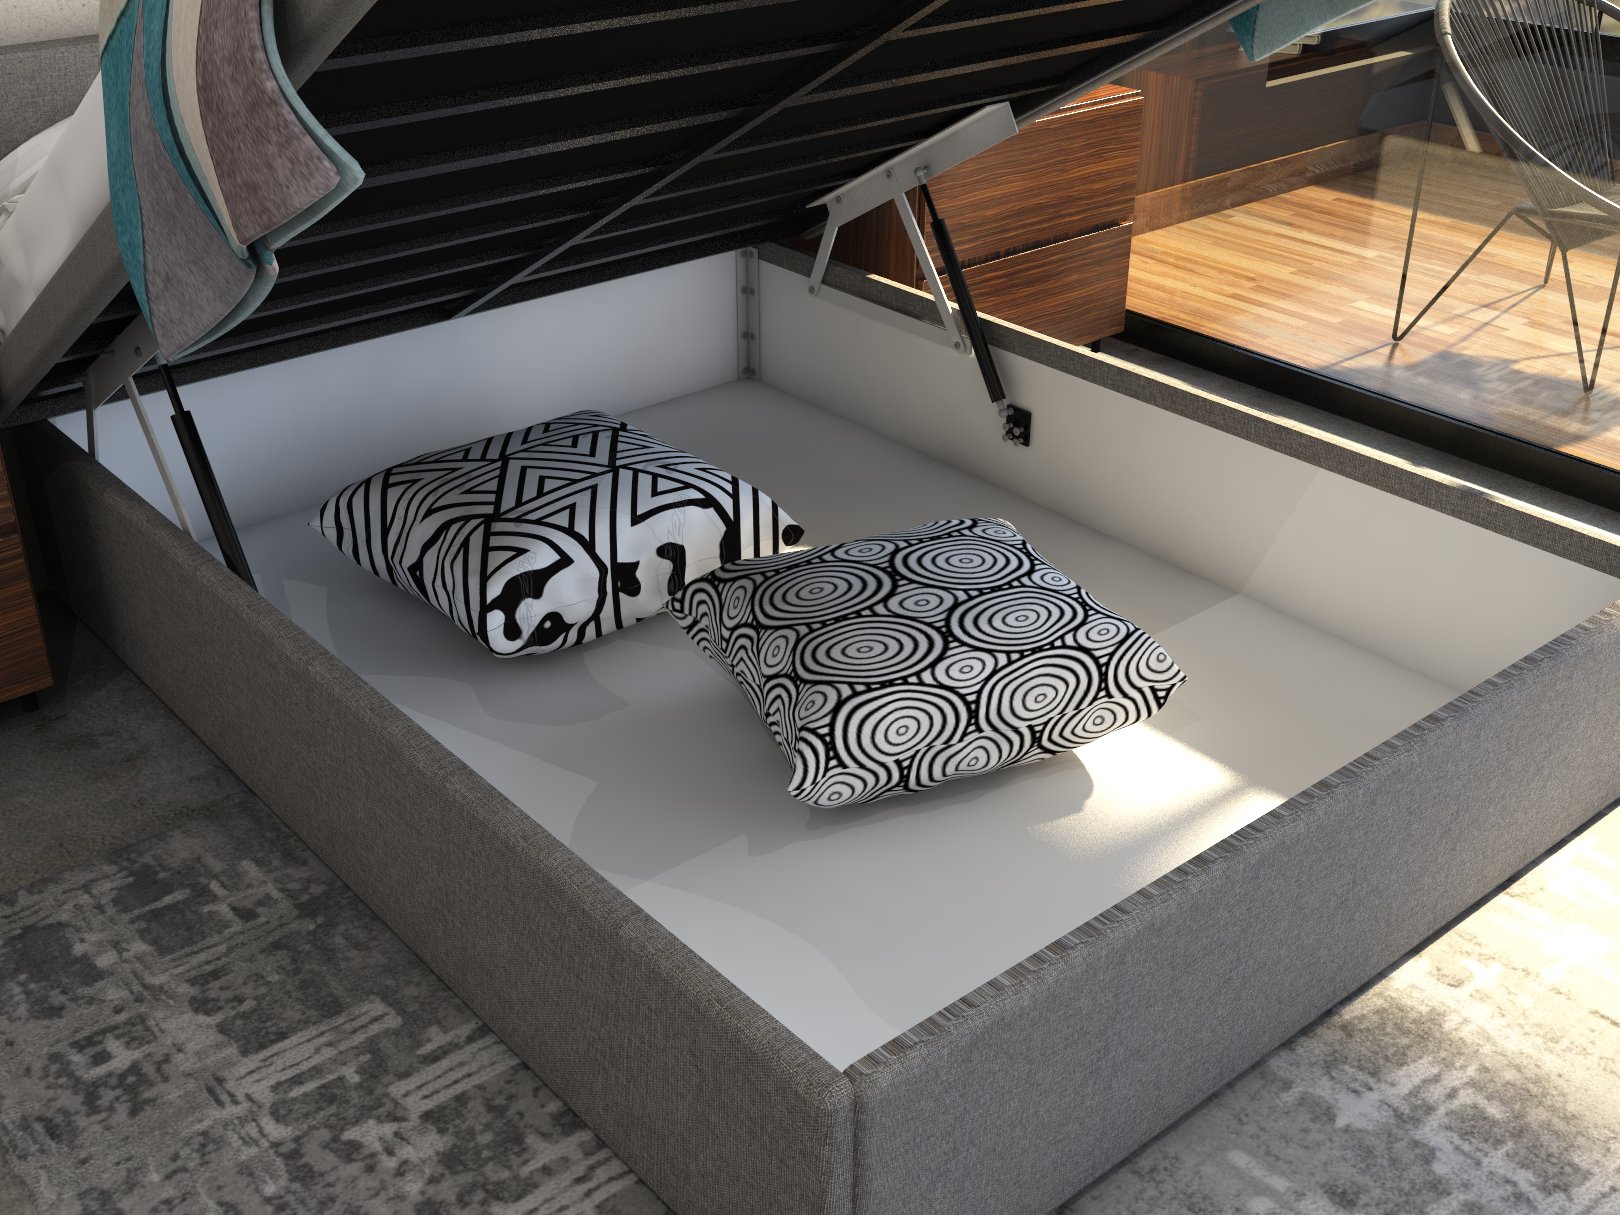 Cunert base de cama individual con tapicería color gris // MS